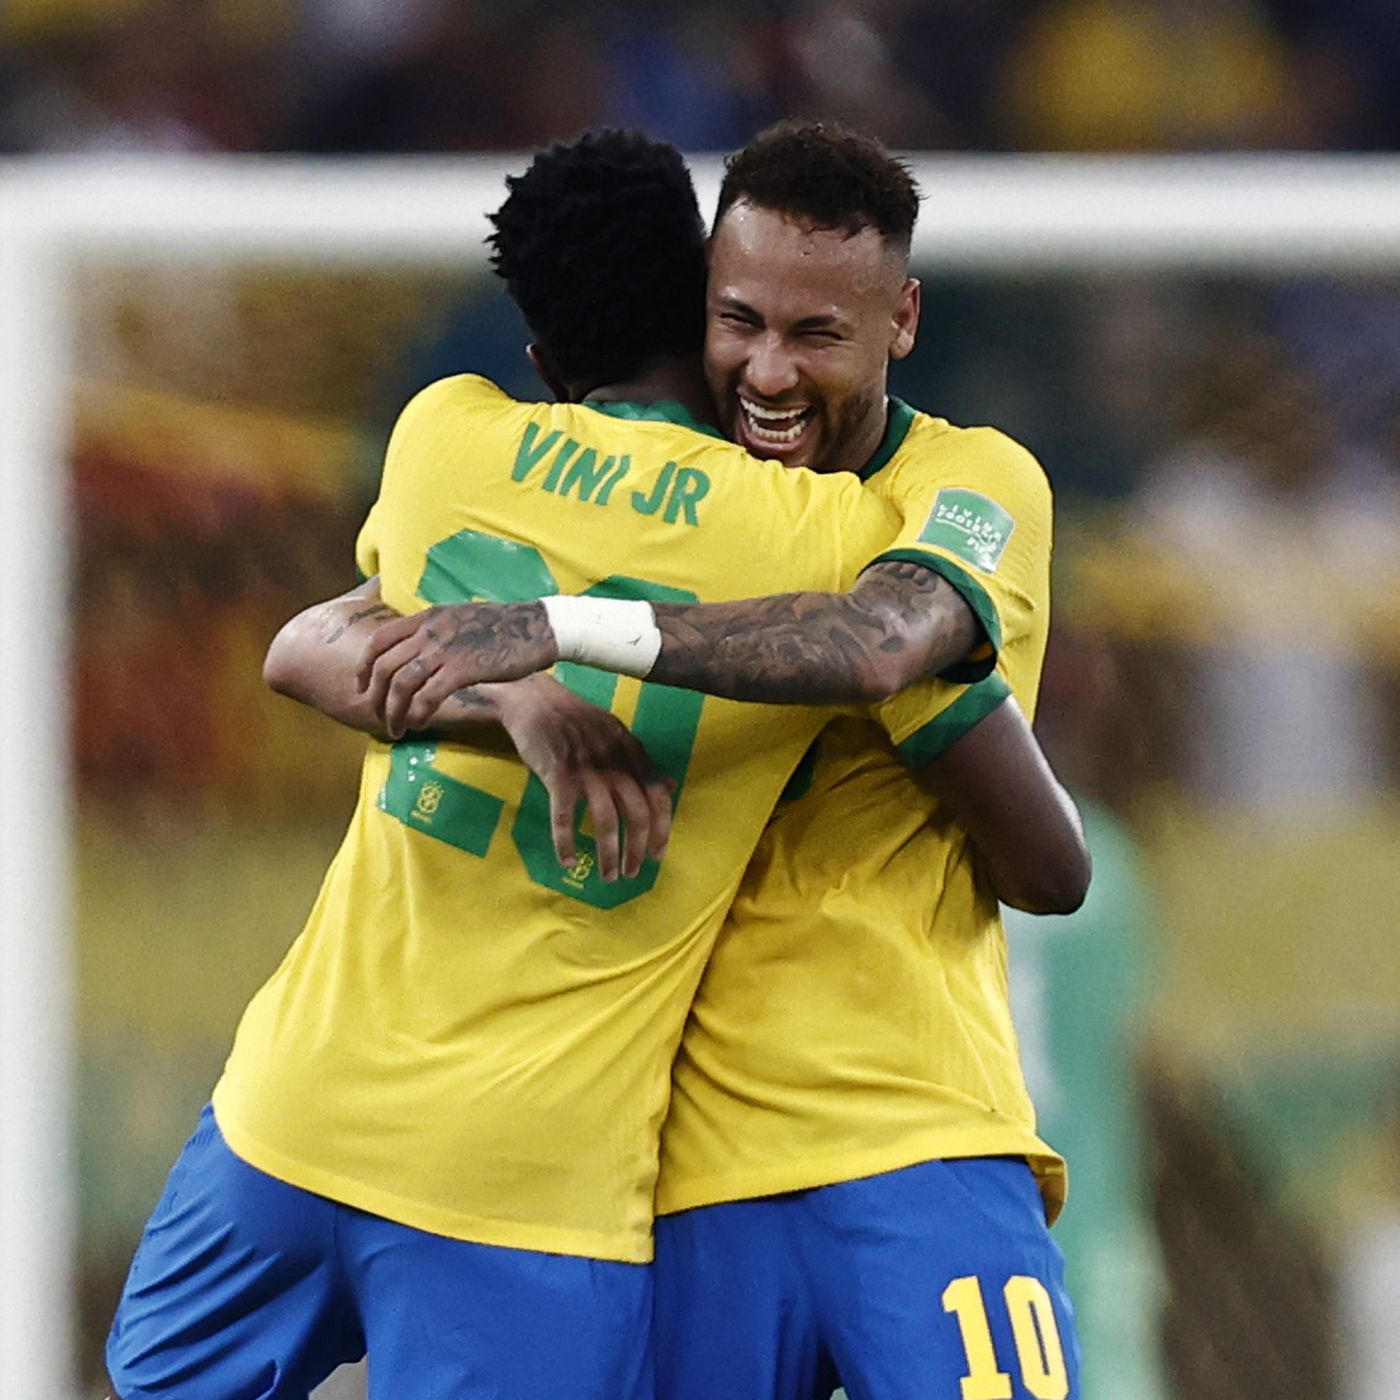 Neymar supports Vinicius: “Dribble